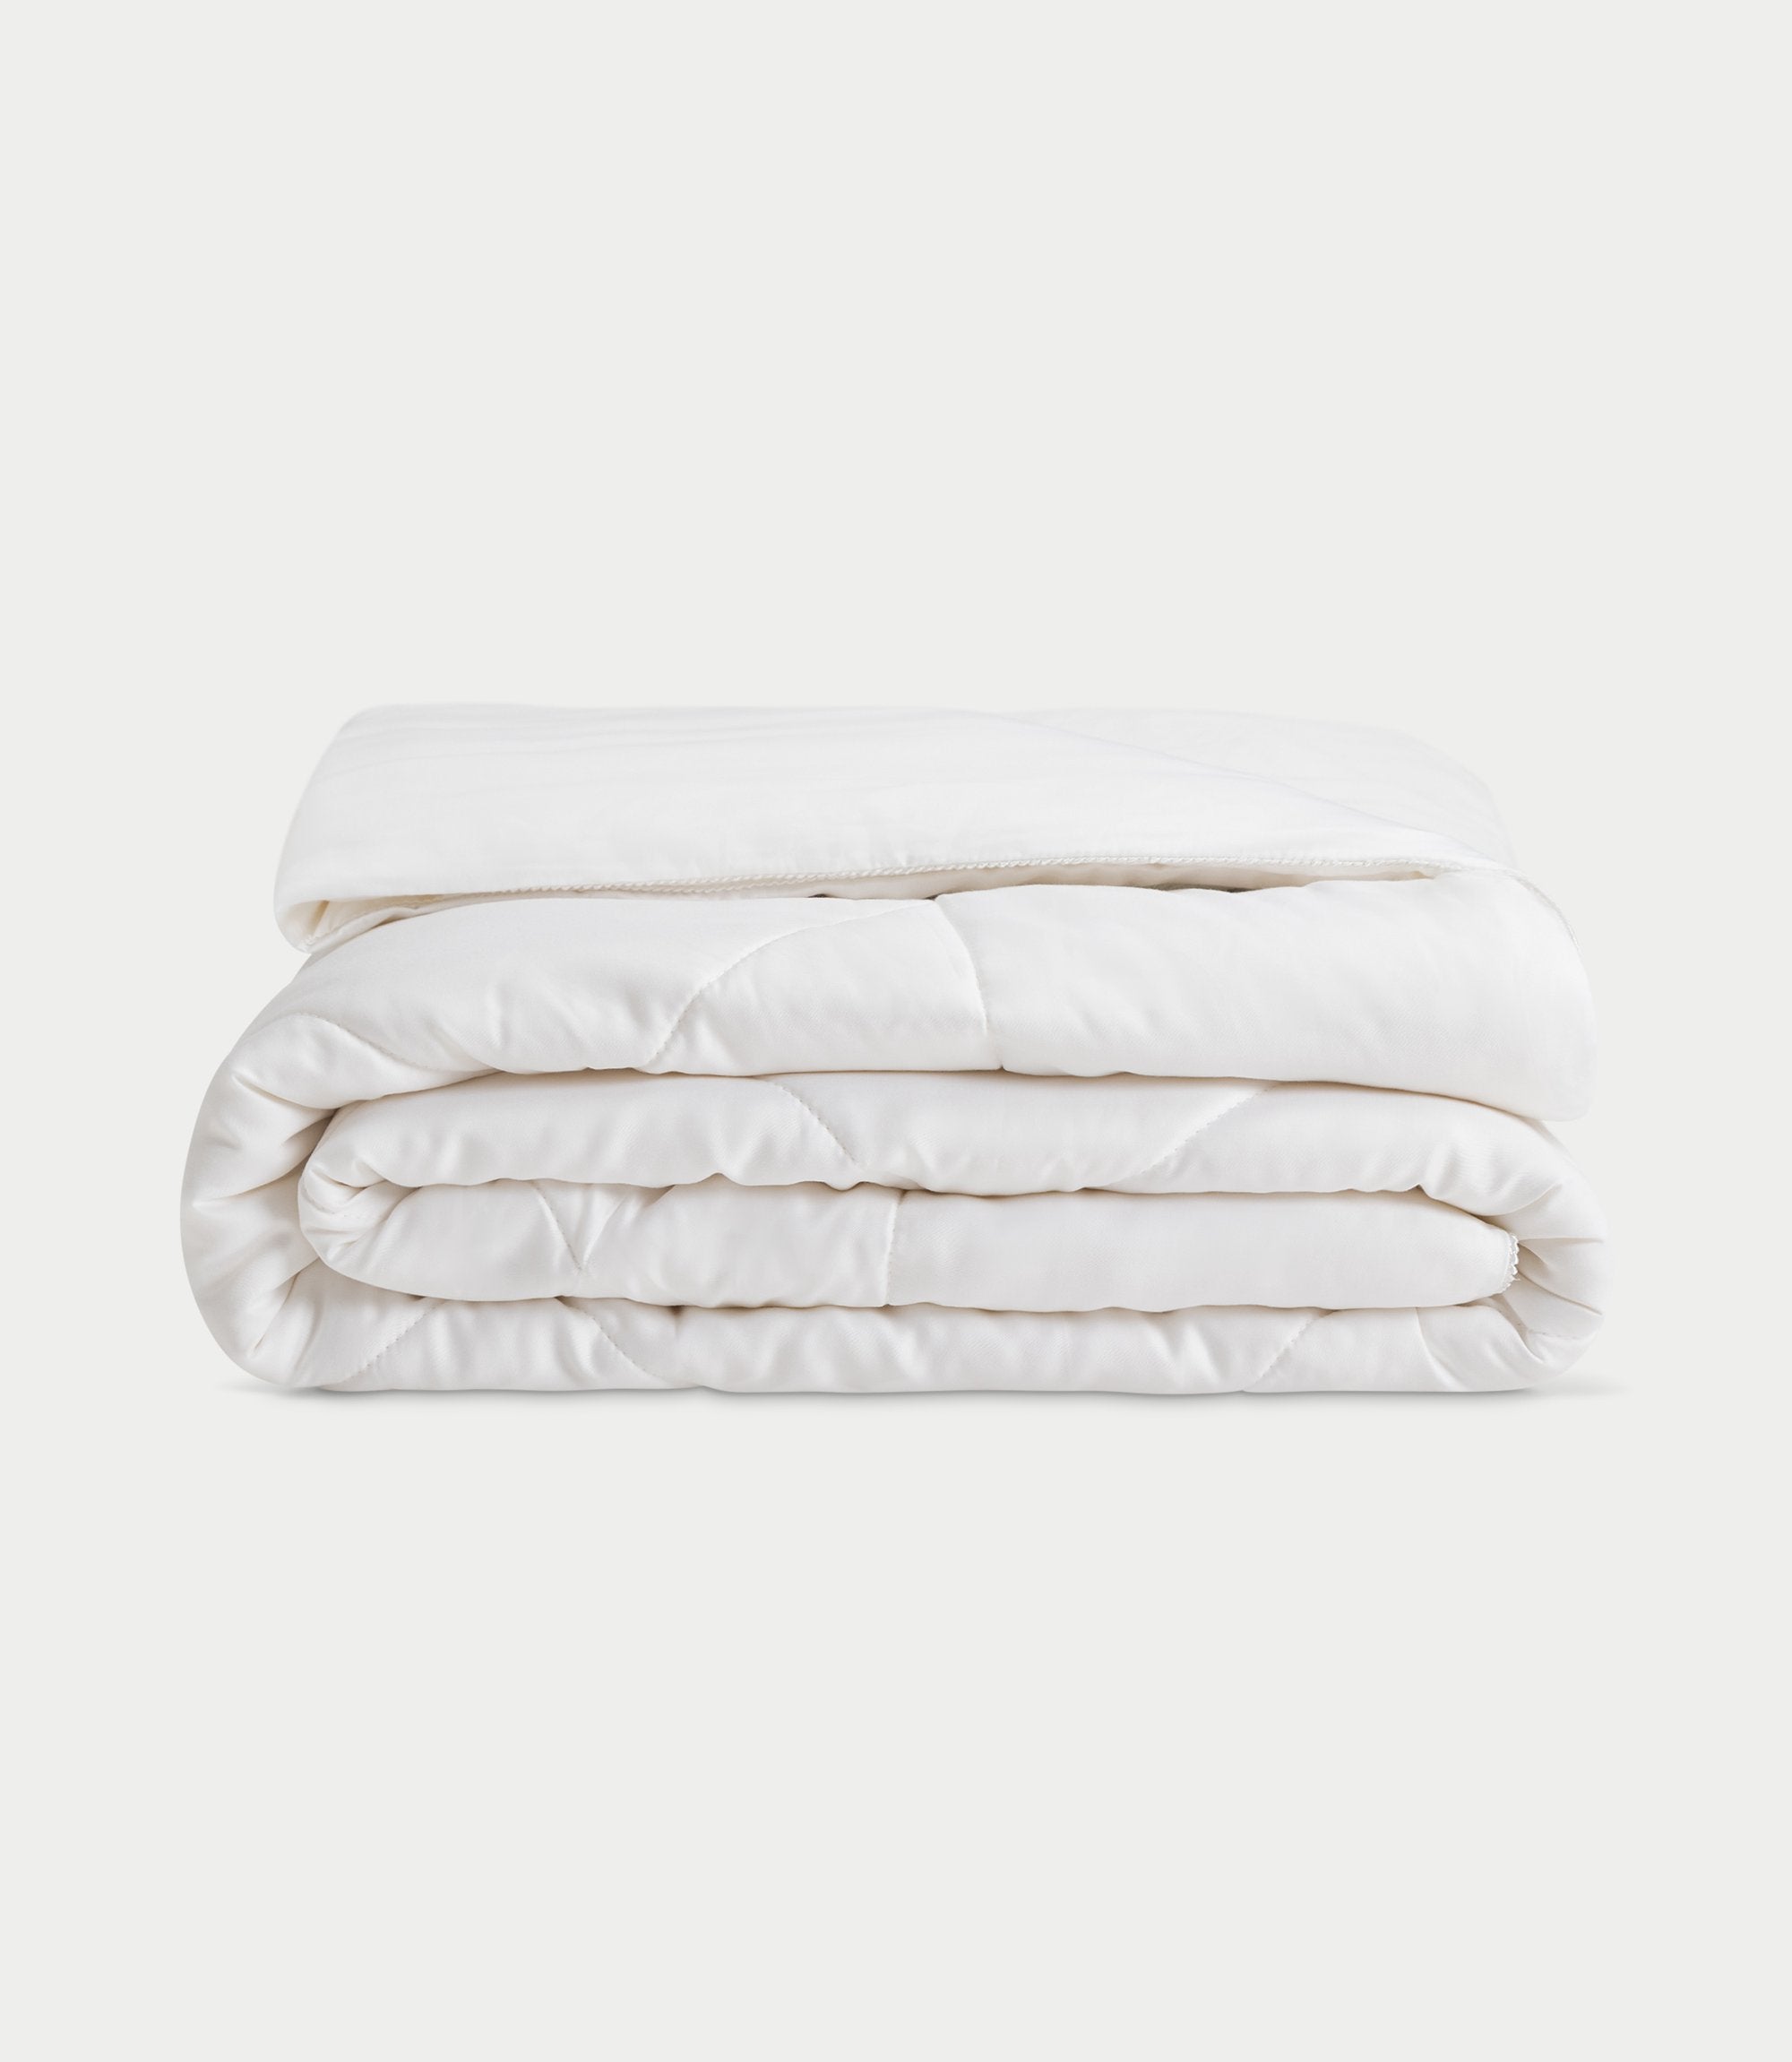 Bamboo Viscose comforter folded up with white background |Filling:Bamboo Viscose